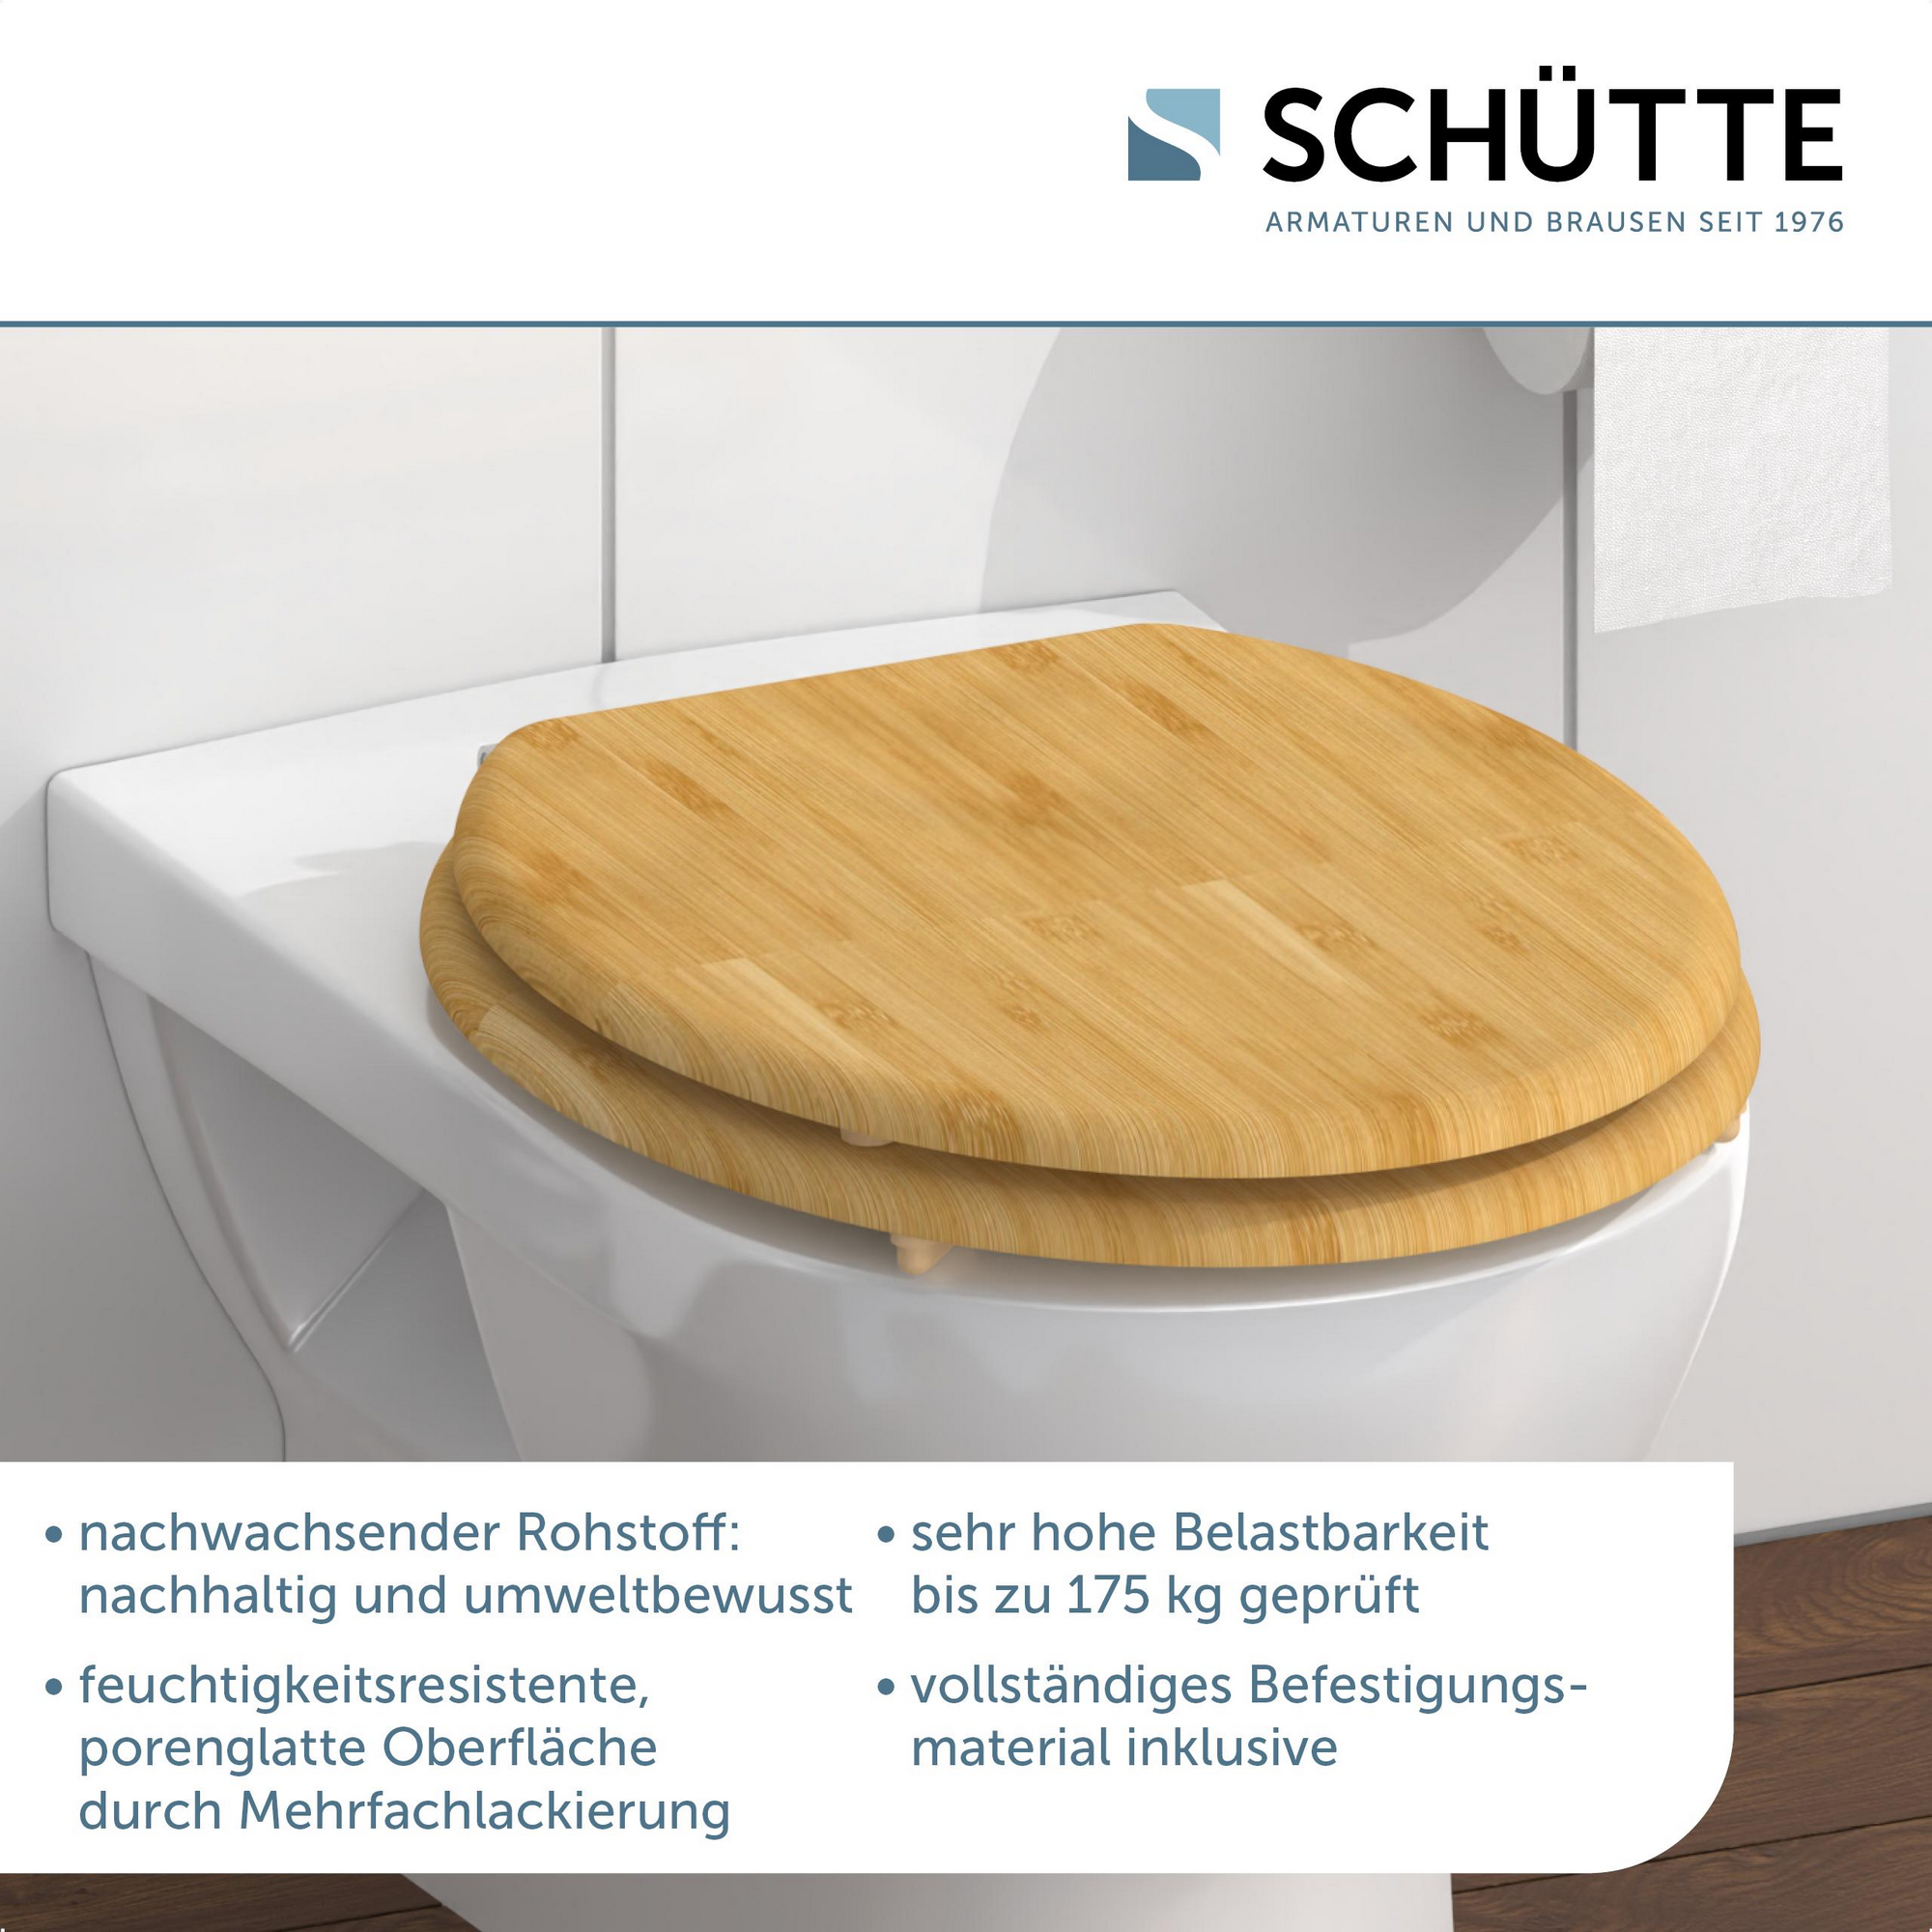 WC-Sitz 'Bambus' braun 37,2 x 42,5 cm + product picture